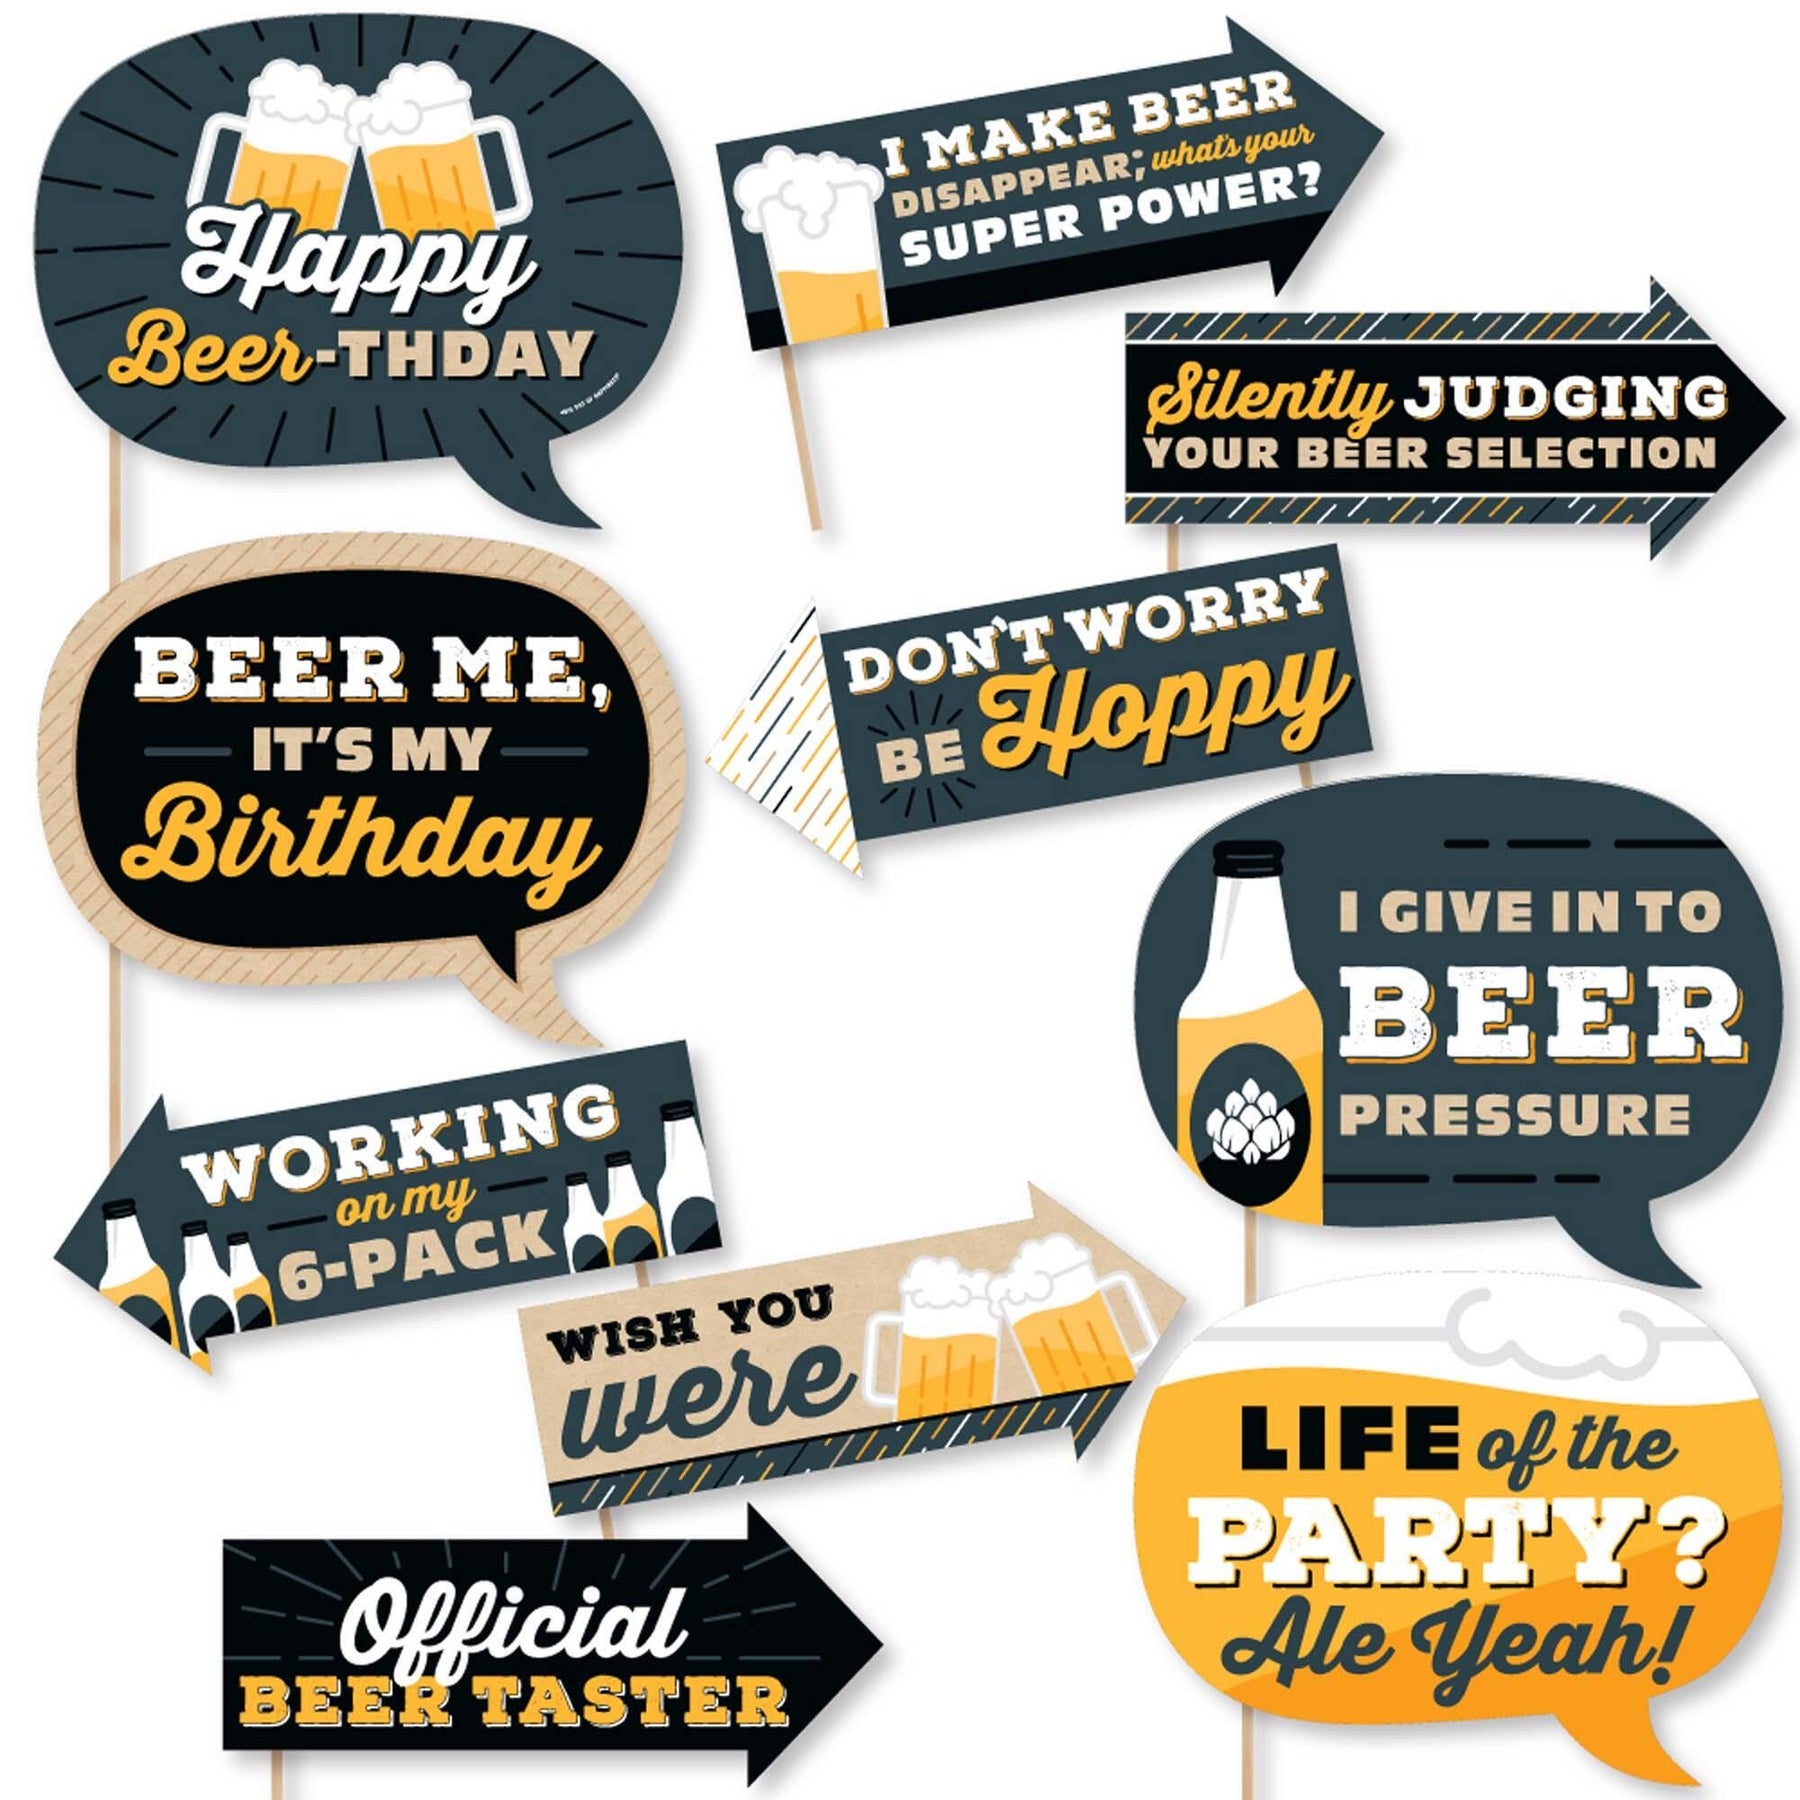 happy birthday cheers beer